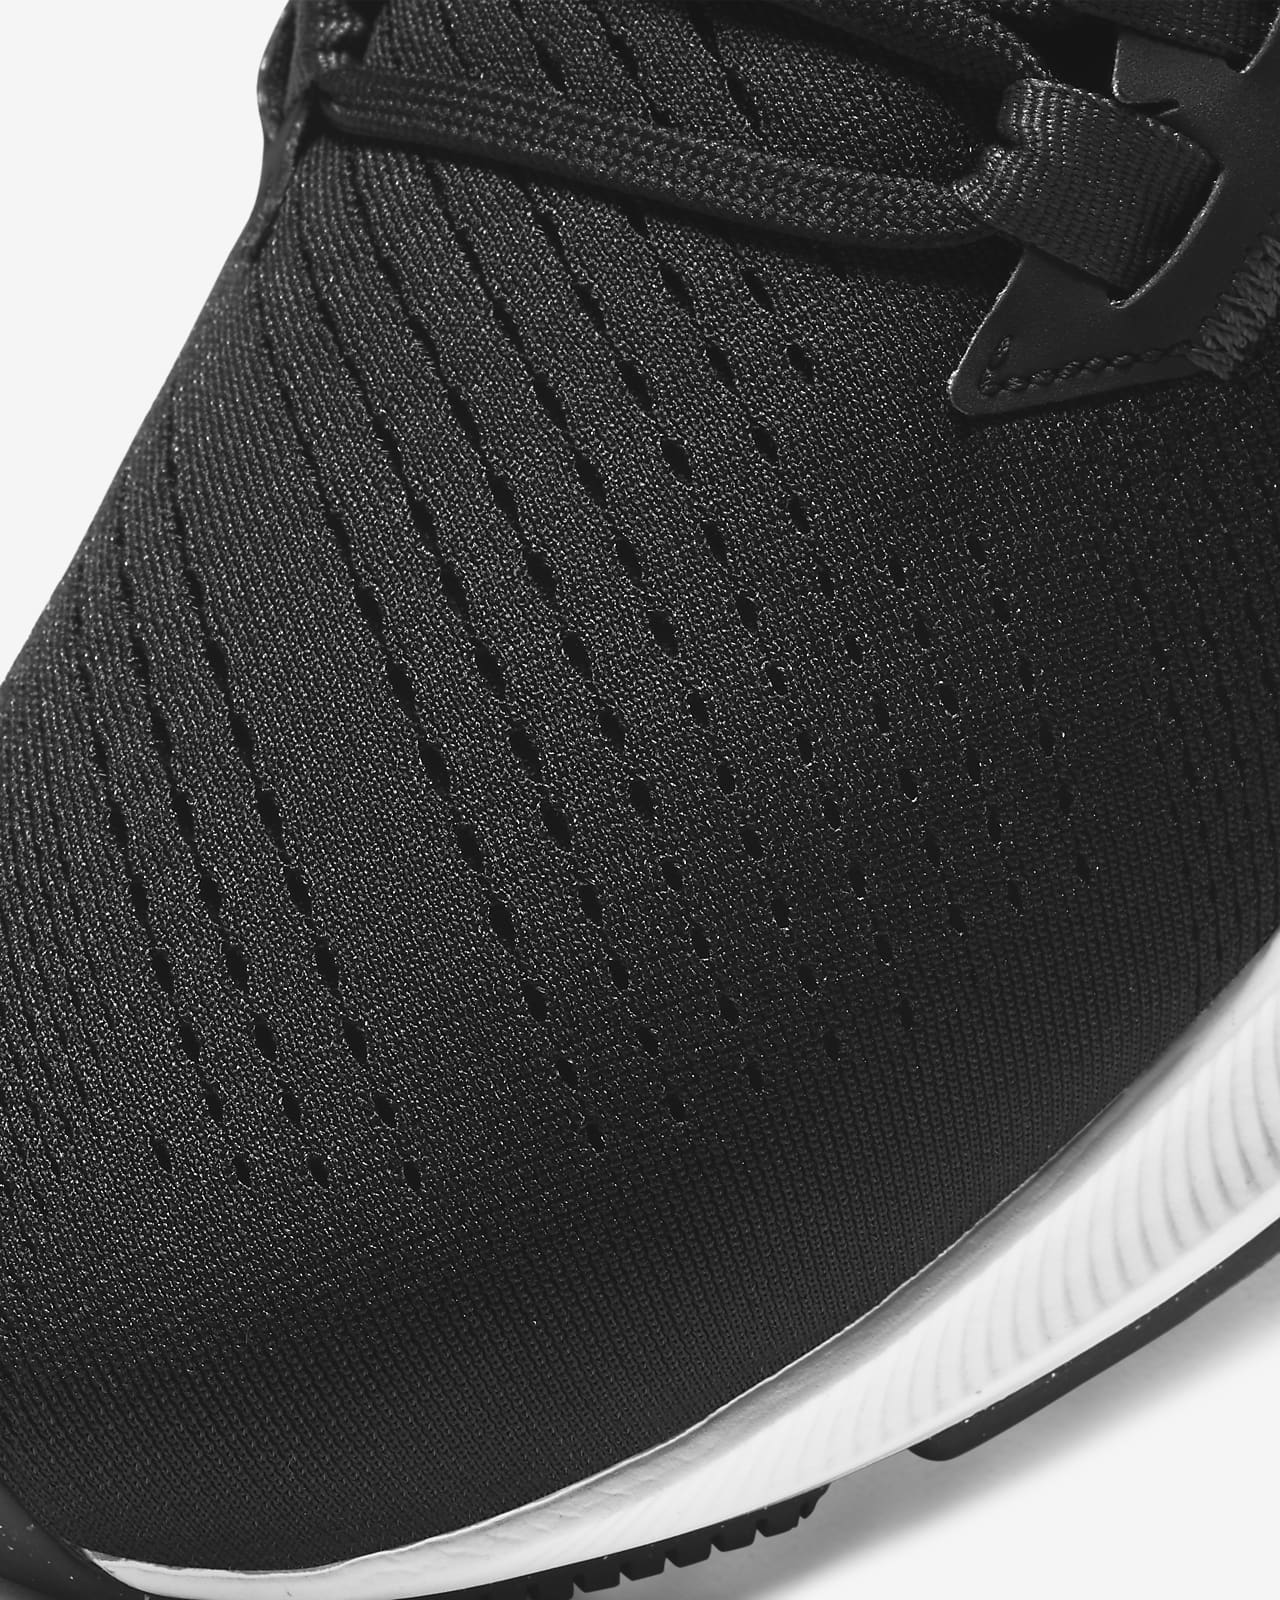 Nike Air Zoom Pegasus 38 Men's Road Running Shoes عطر مميز من الماجد